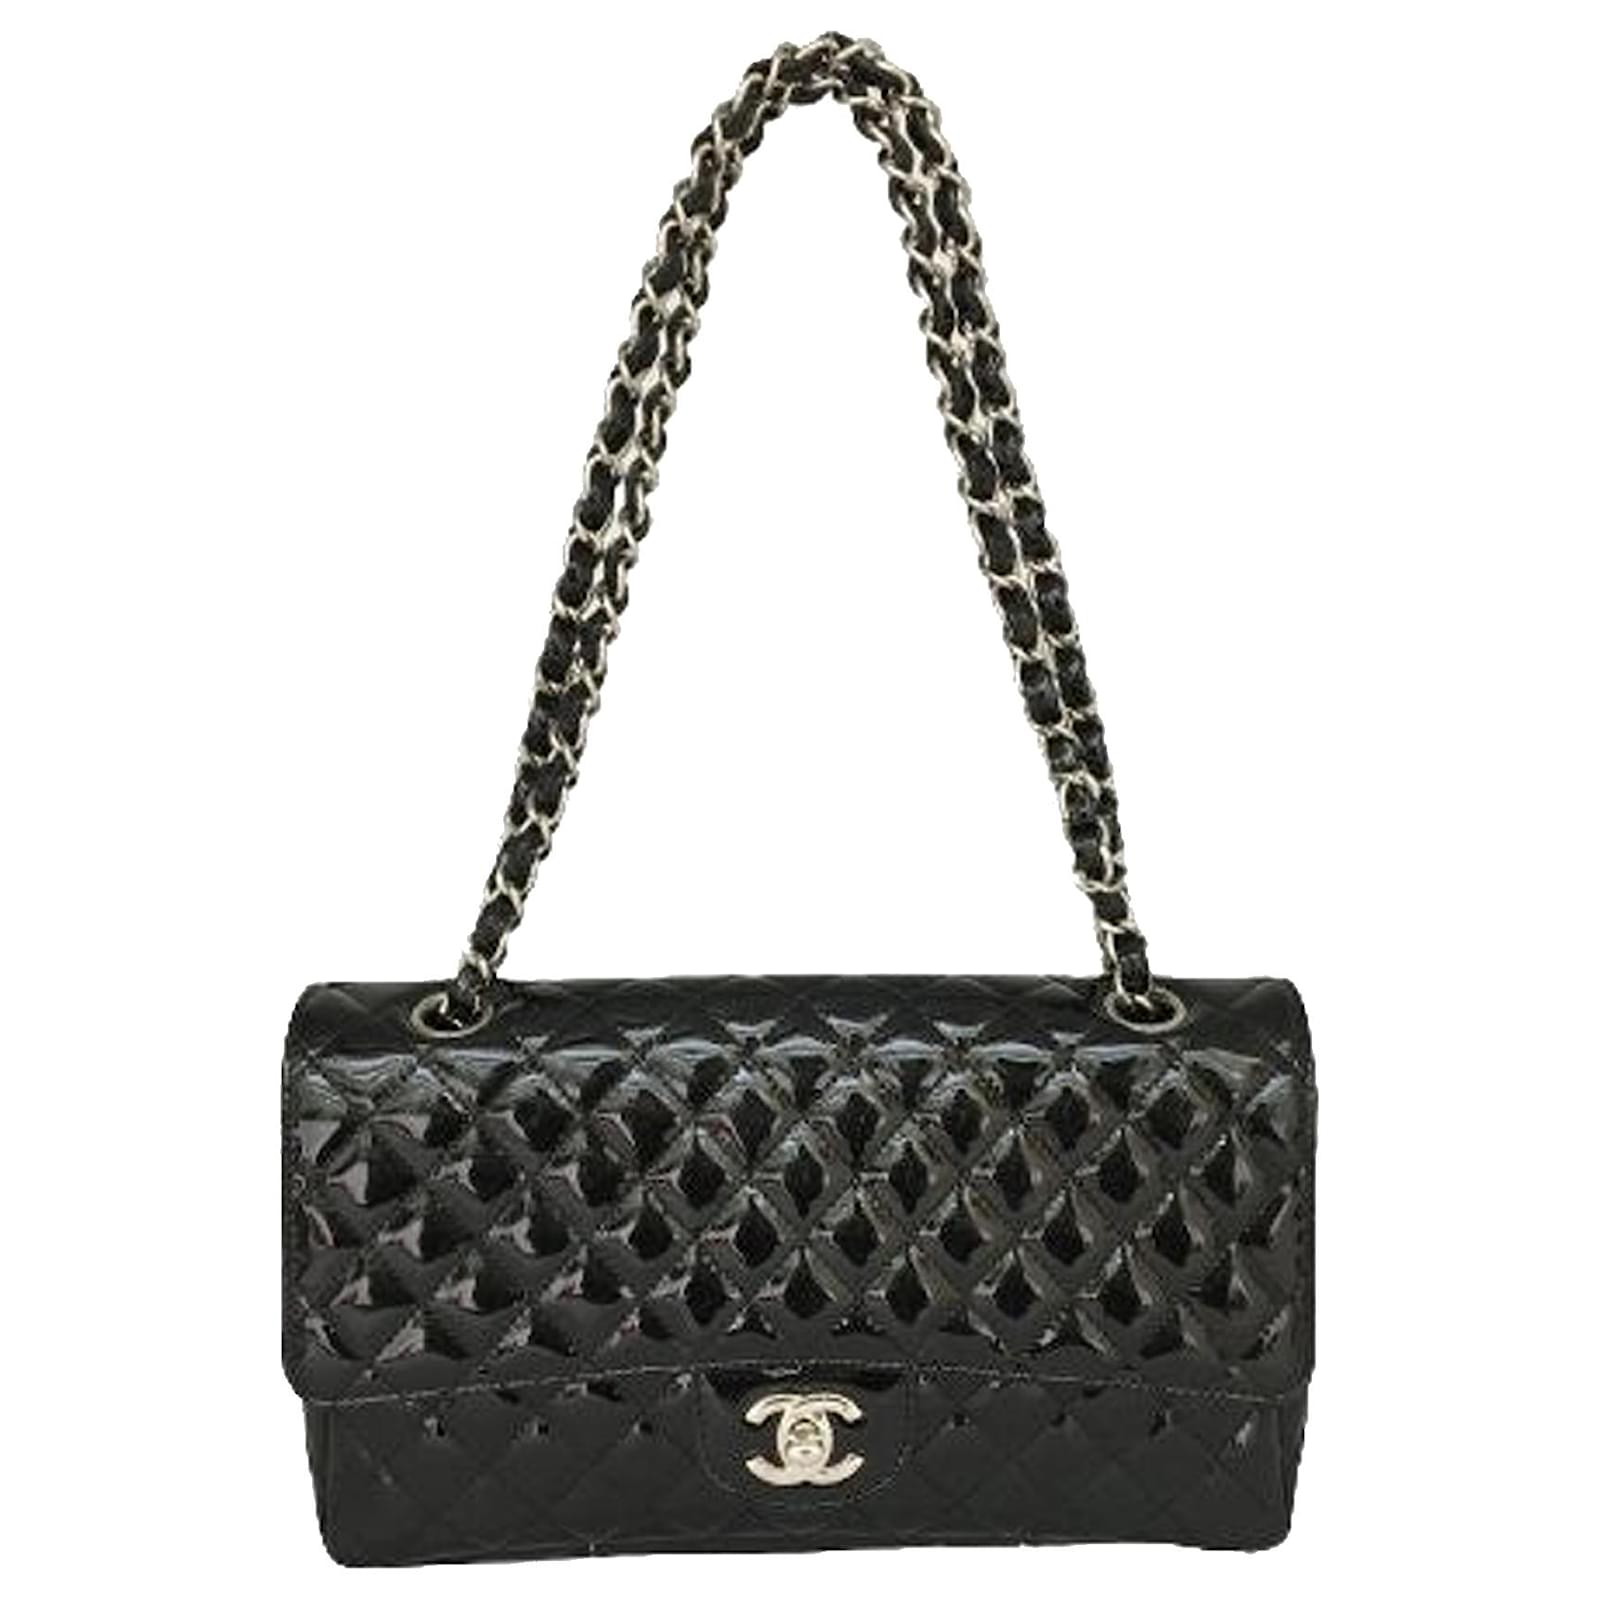 Chanel Black Medium Secret Label Patent Leather Flap Bag